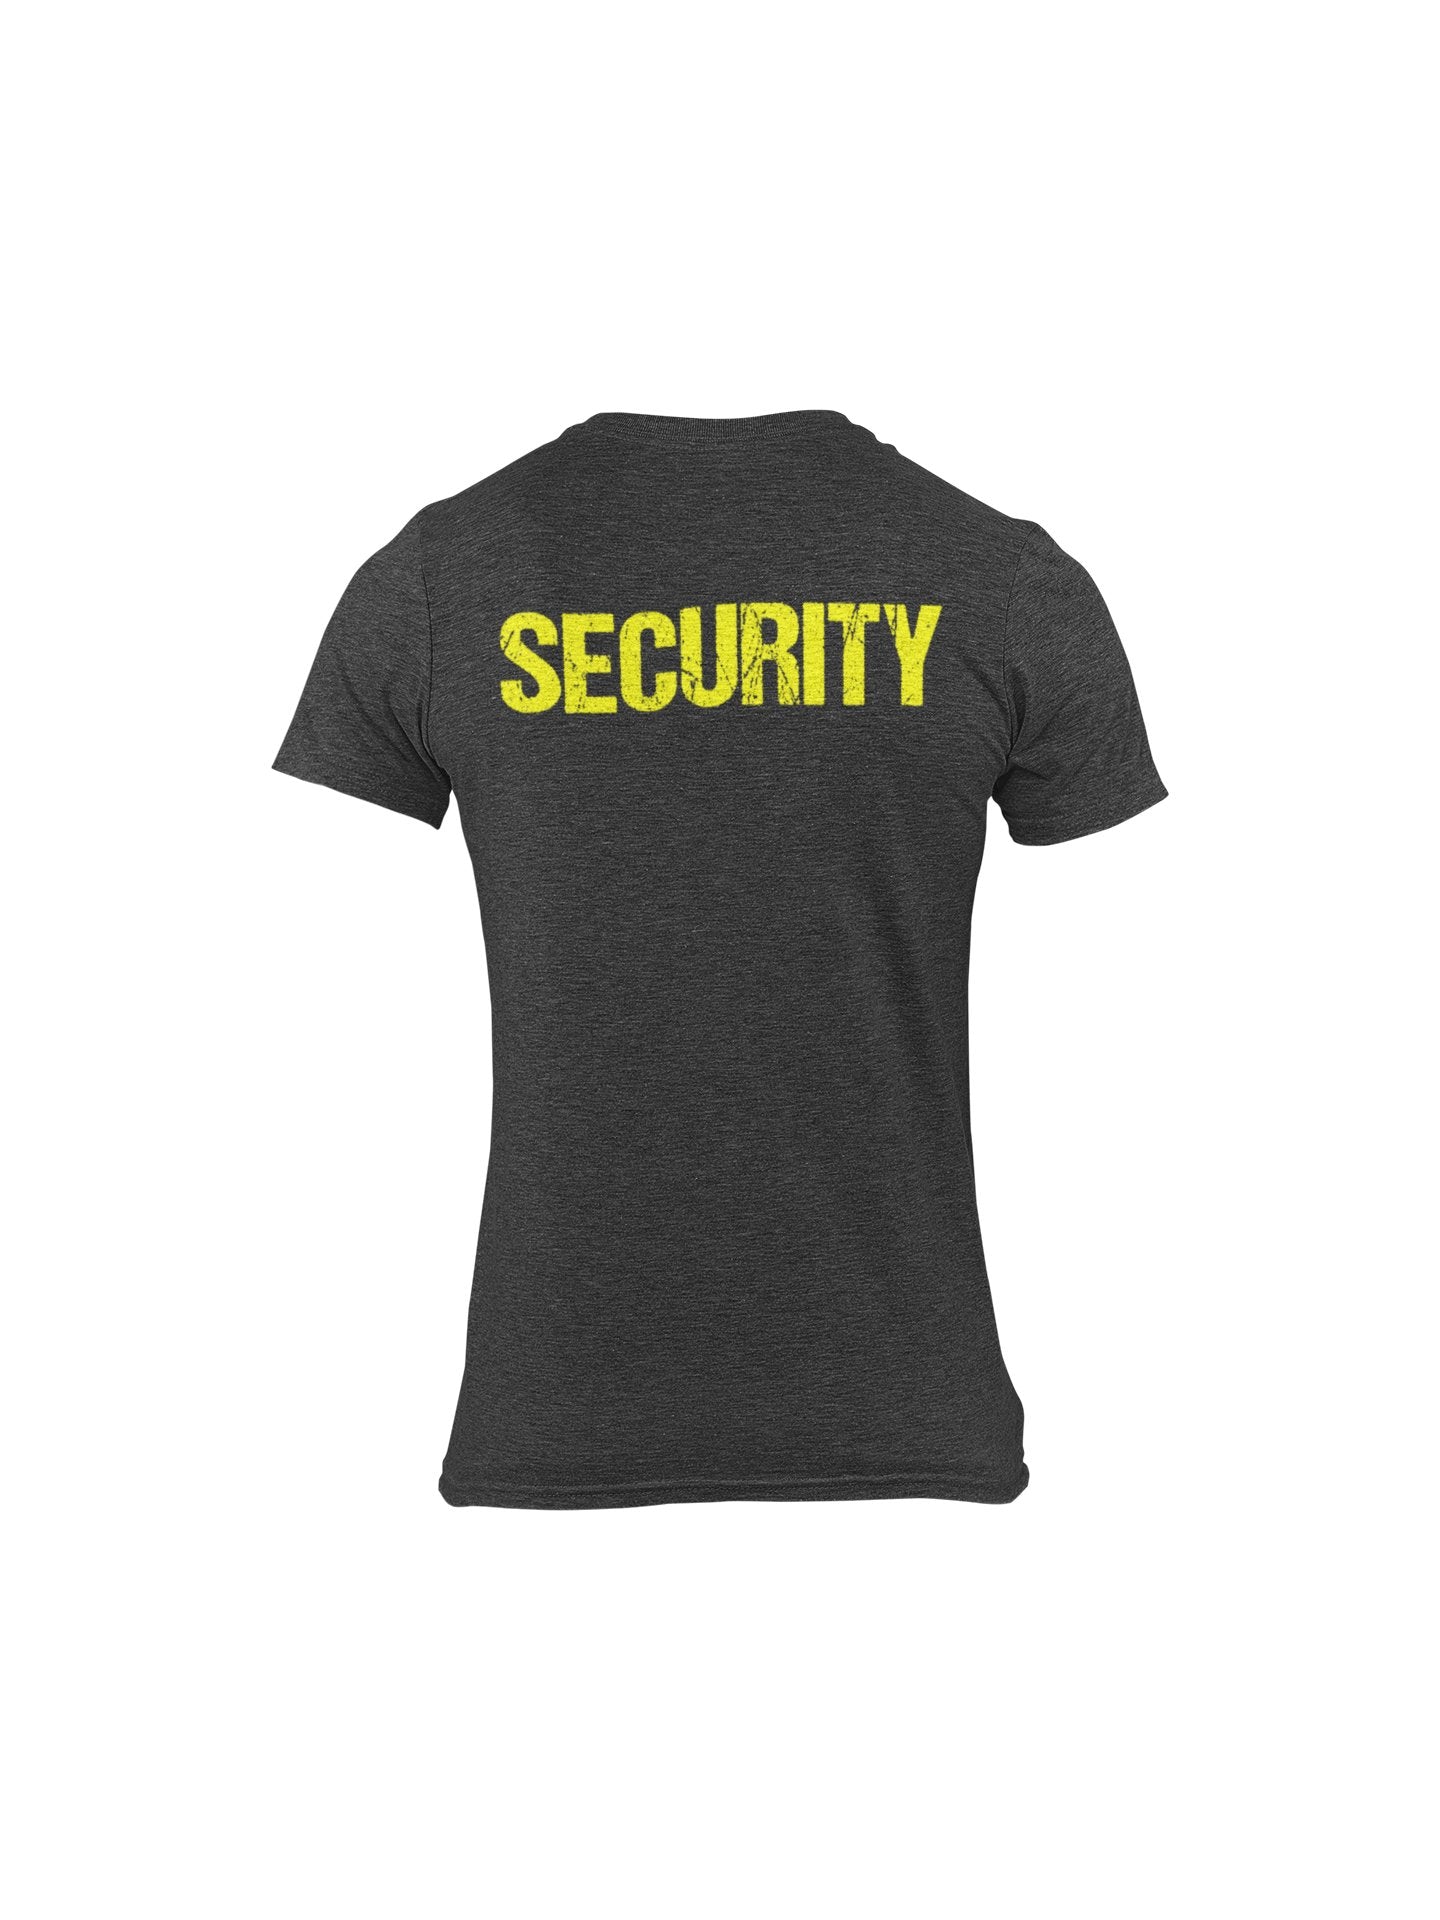 Security Men's Tee (Distressed Design, Heather Charcoal & Neon)